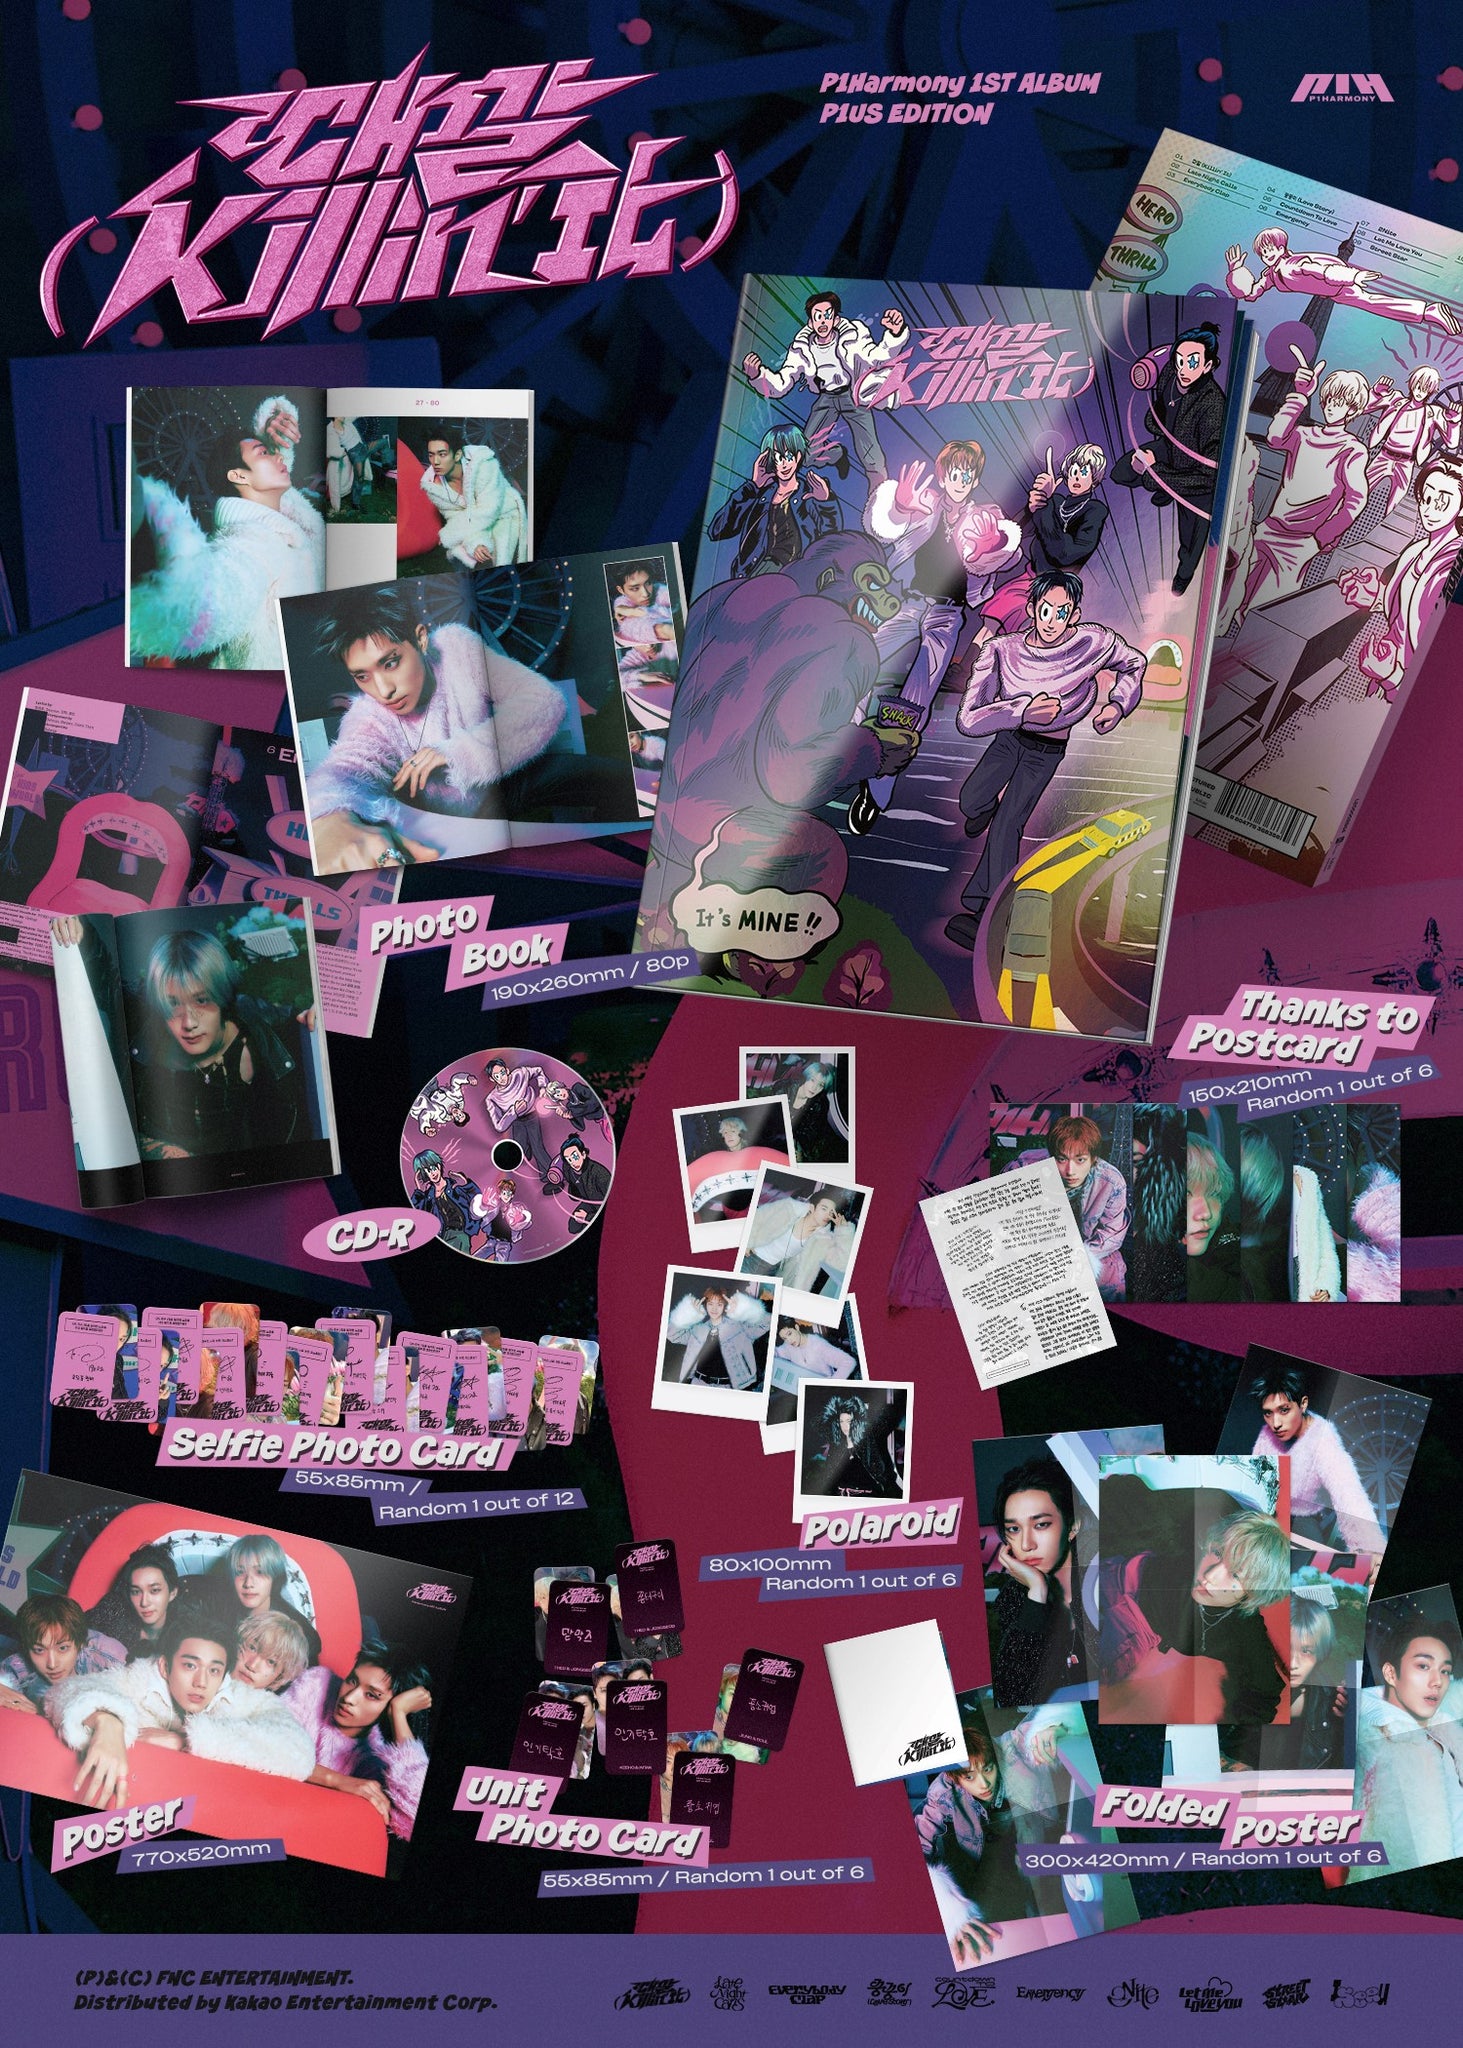 P1Harmony 1st Full Album Killin’ It - P1us Edition Inclusions Photobook CD Thanks To Postcard Polaroid Selfie Photocard Unit Photocard Folded Poster 1st Press Poster